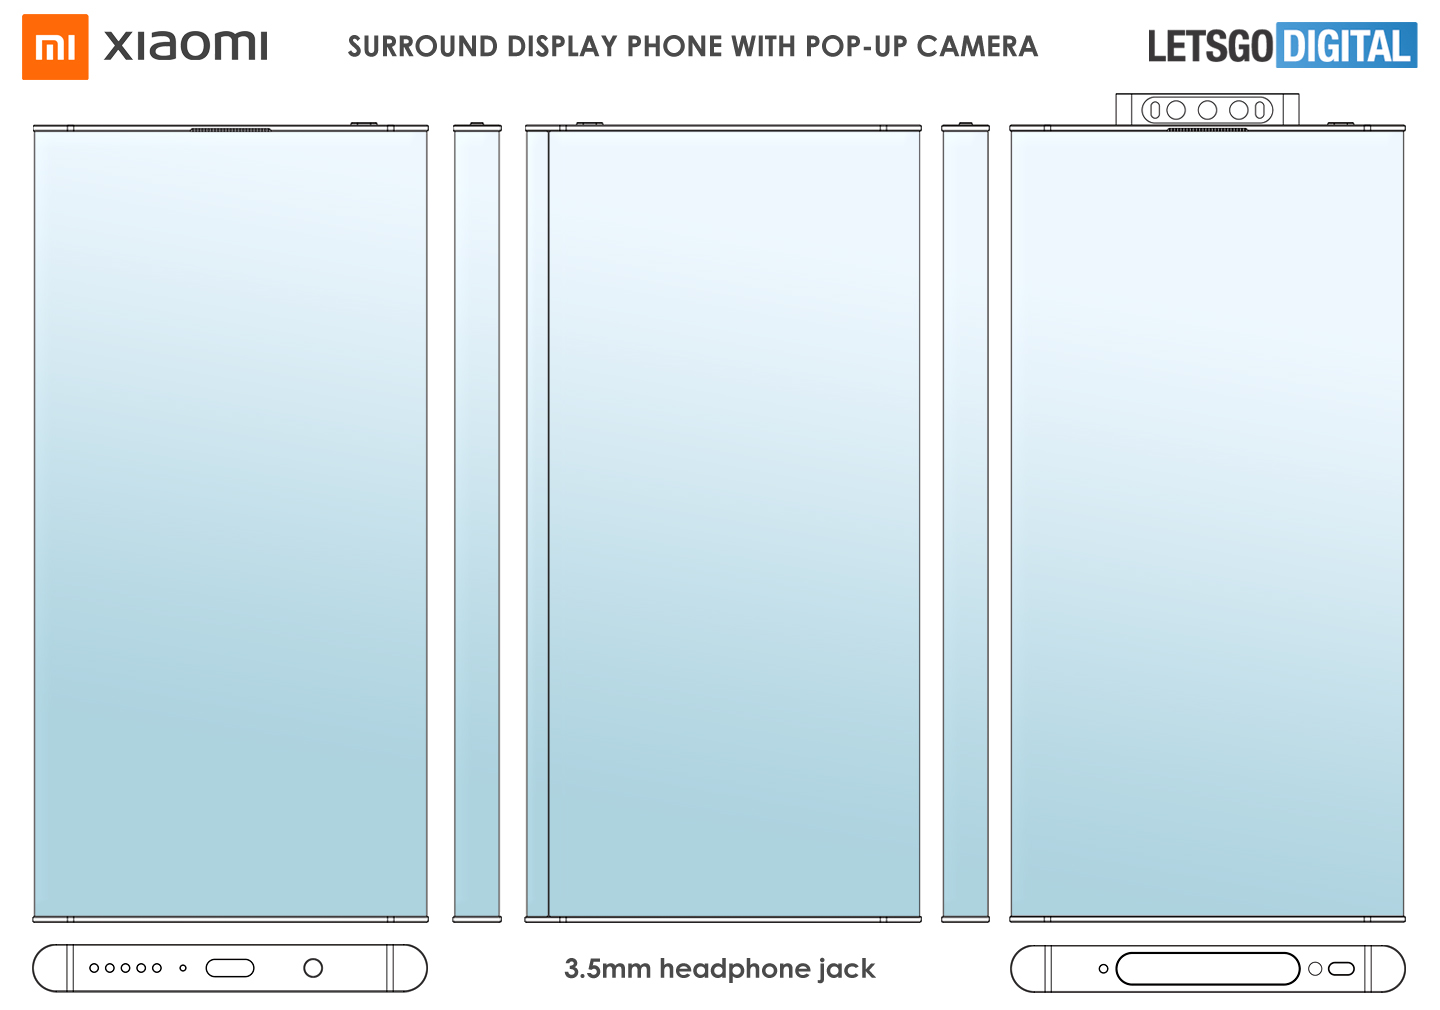 Xiaomi surround display smartphone pop-up camera